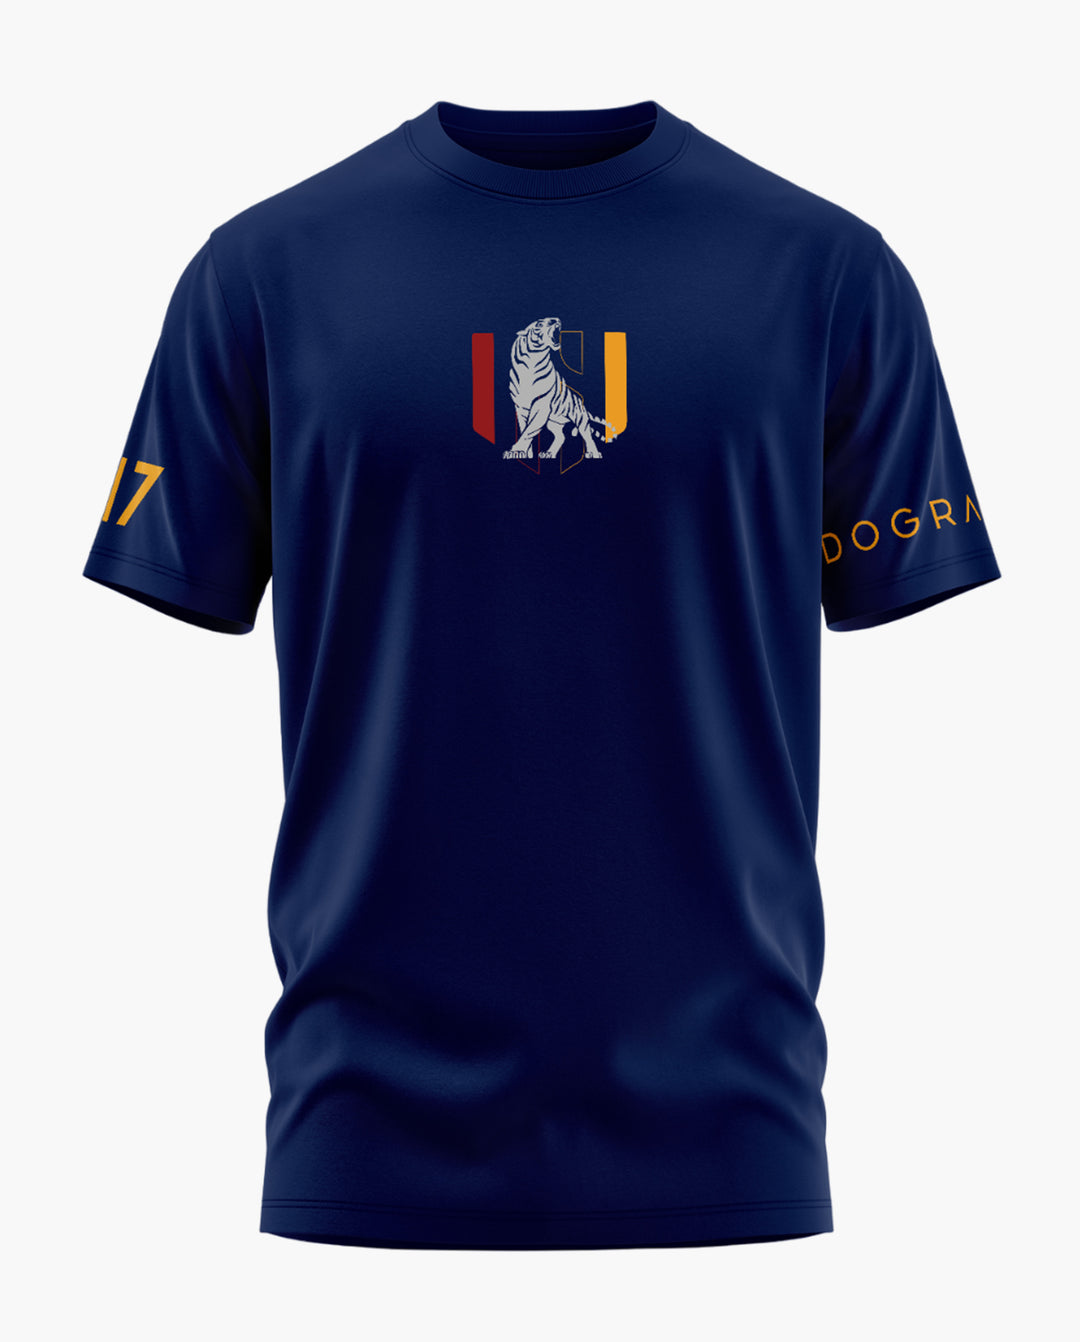 17TH DOGRA REGIMENT T-Shirt